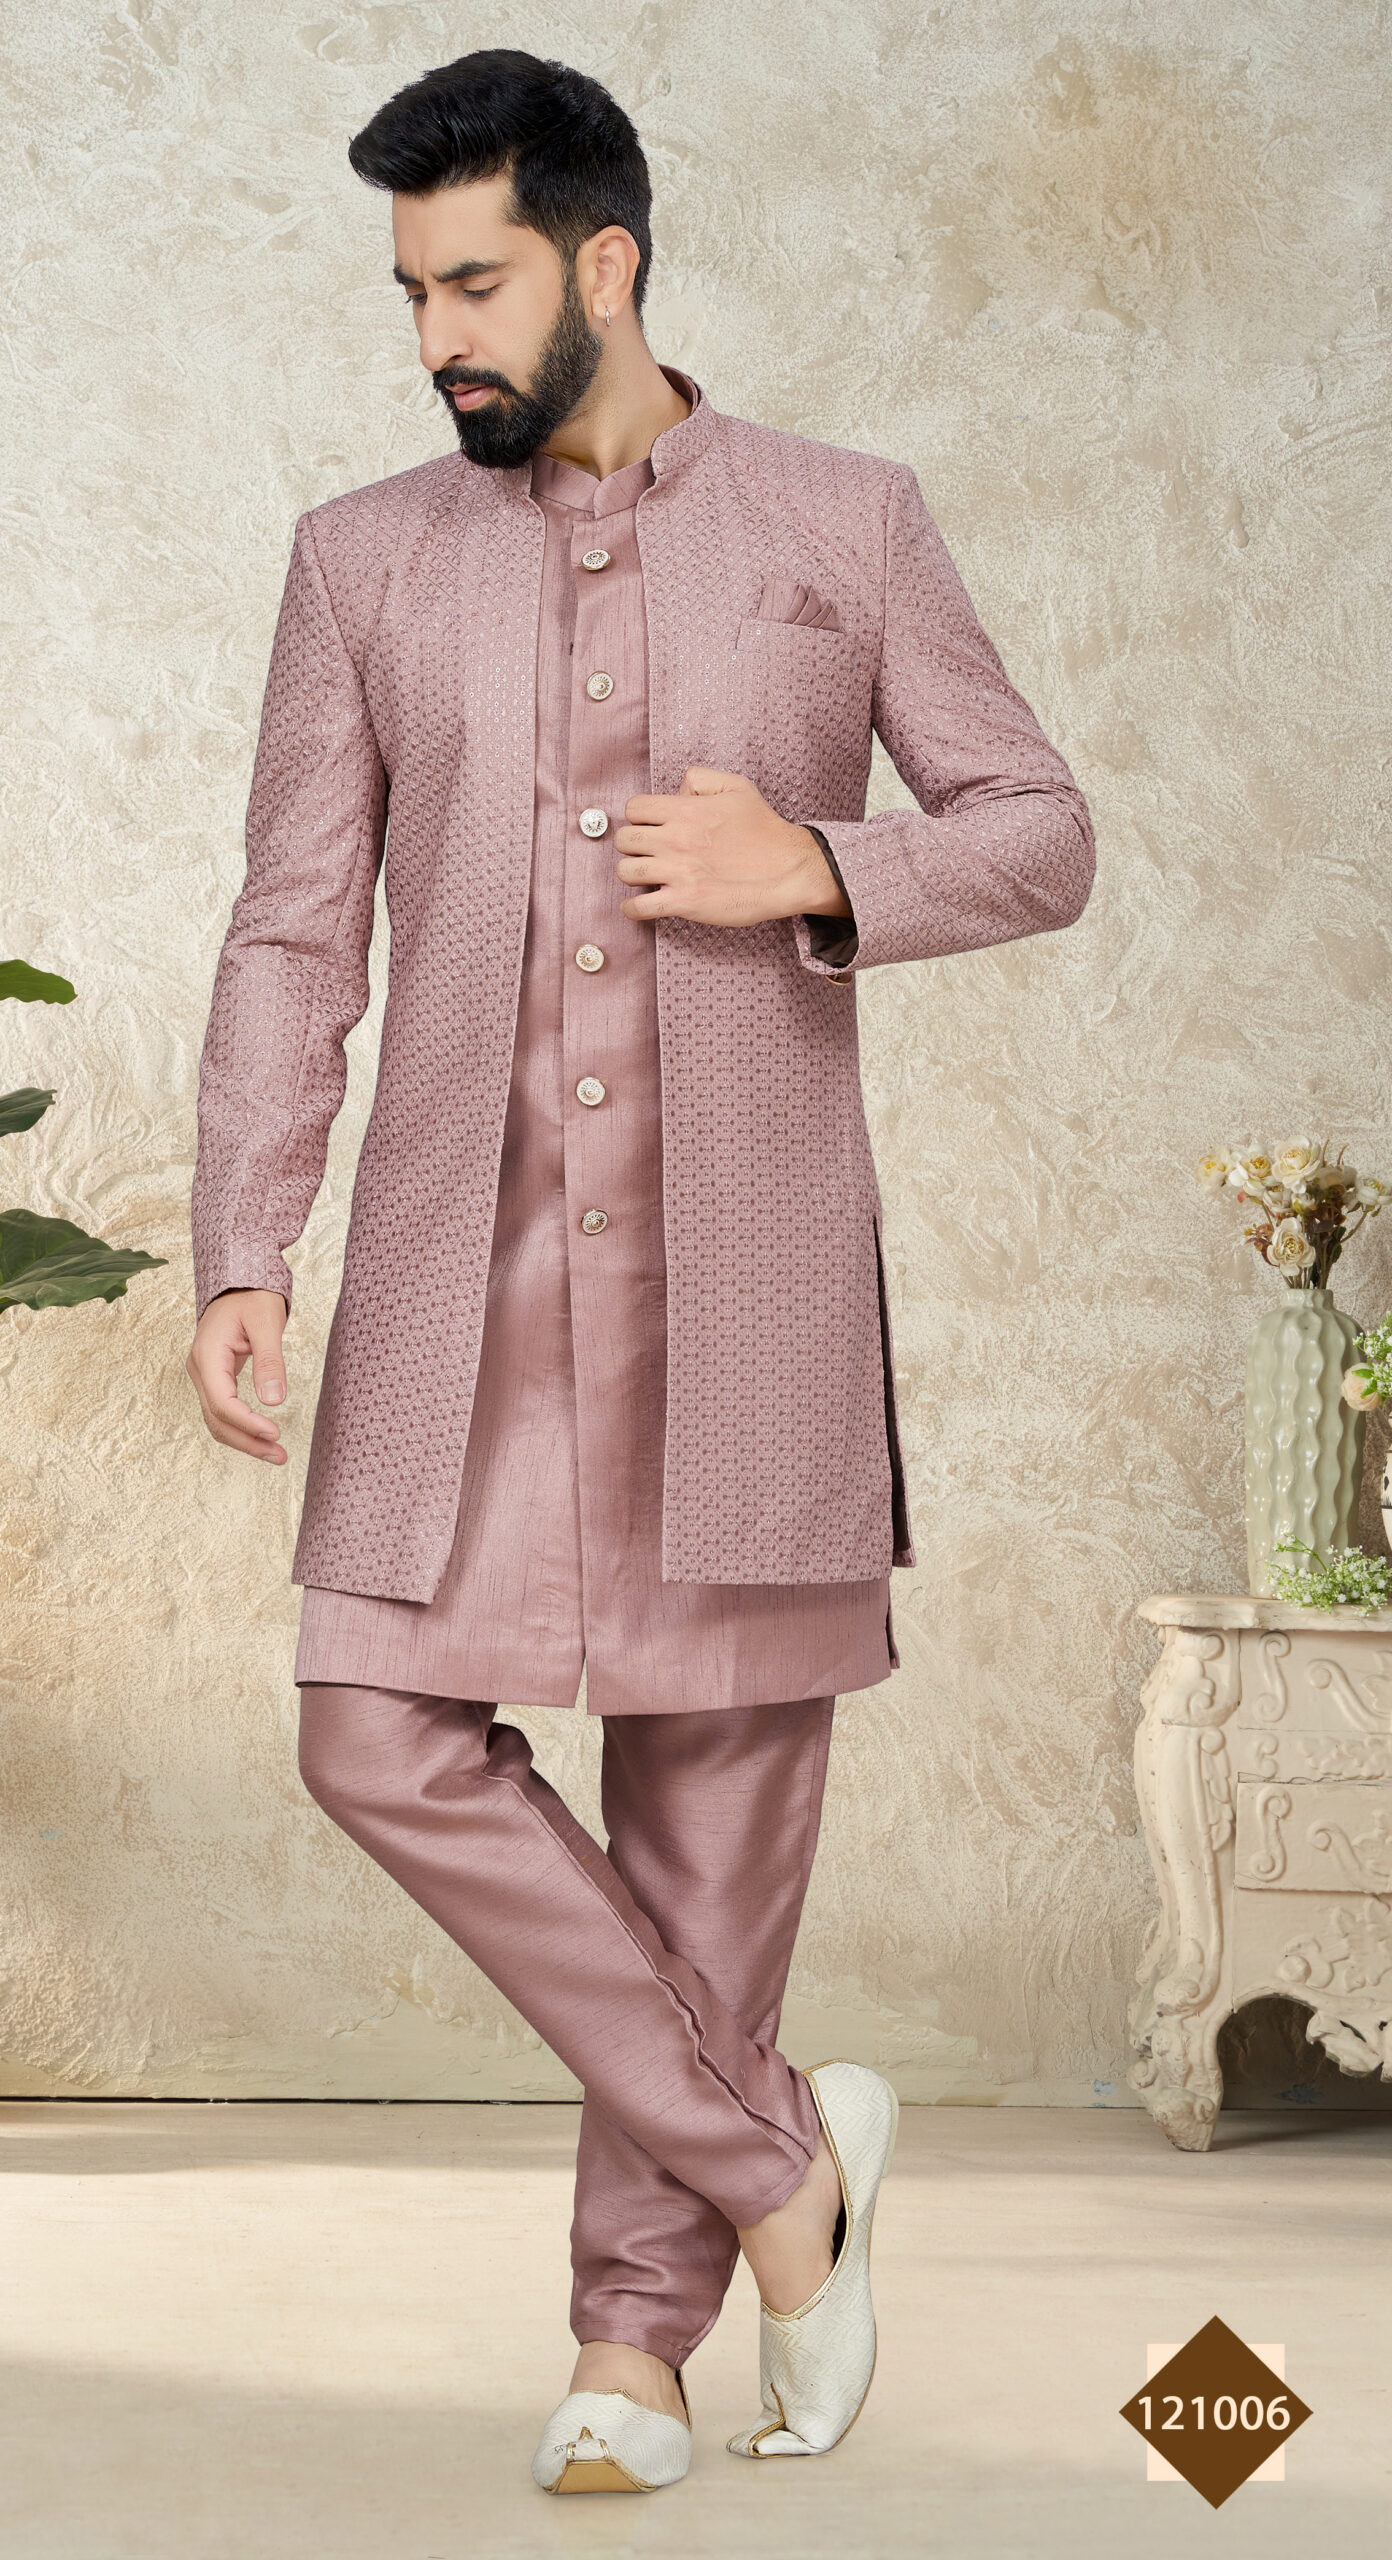 Groom Latest Sherwani Design Marriage Dark Pink Sherwani for Wedding scaled